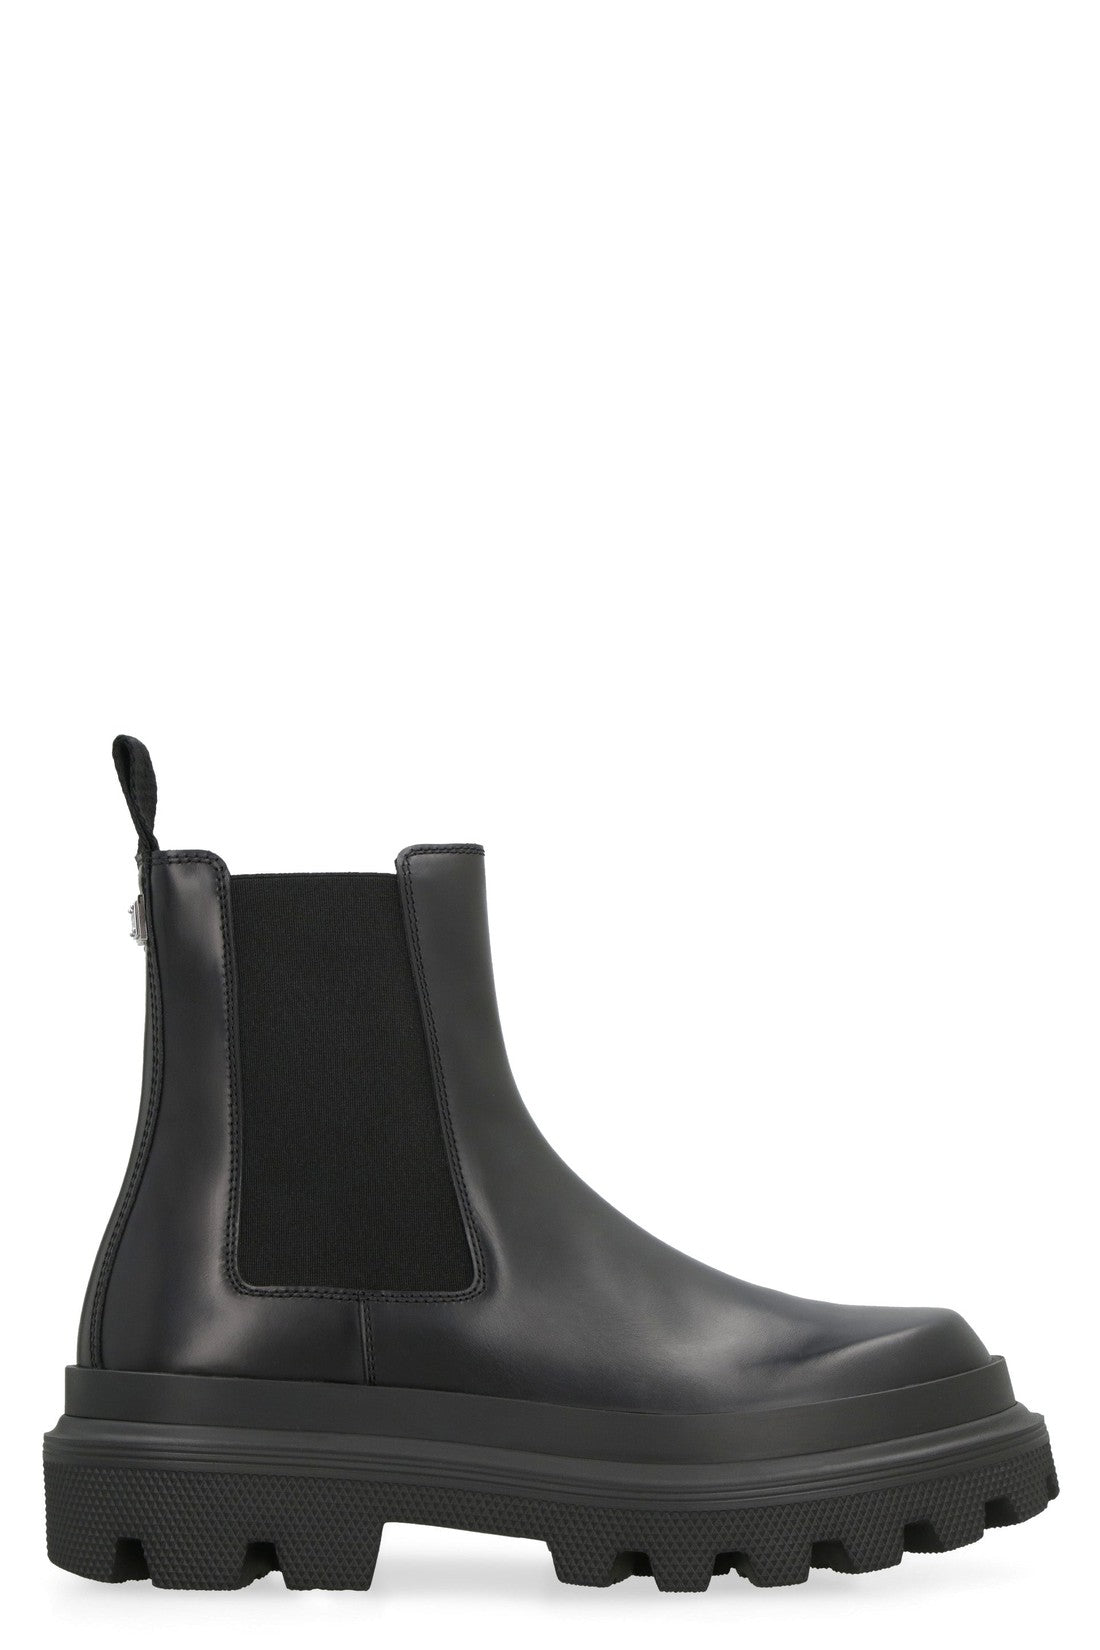 Dolce & Gabbana-OUTLET-SALE-Leather Chelsea boots-ARCHIVIST